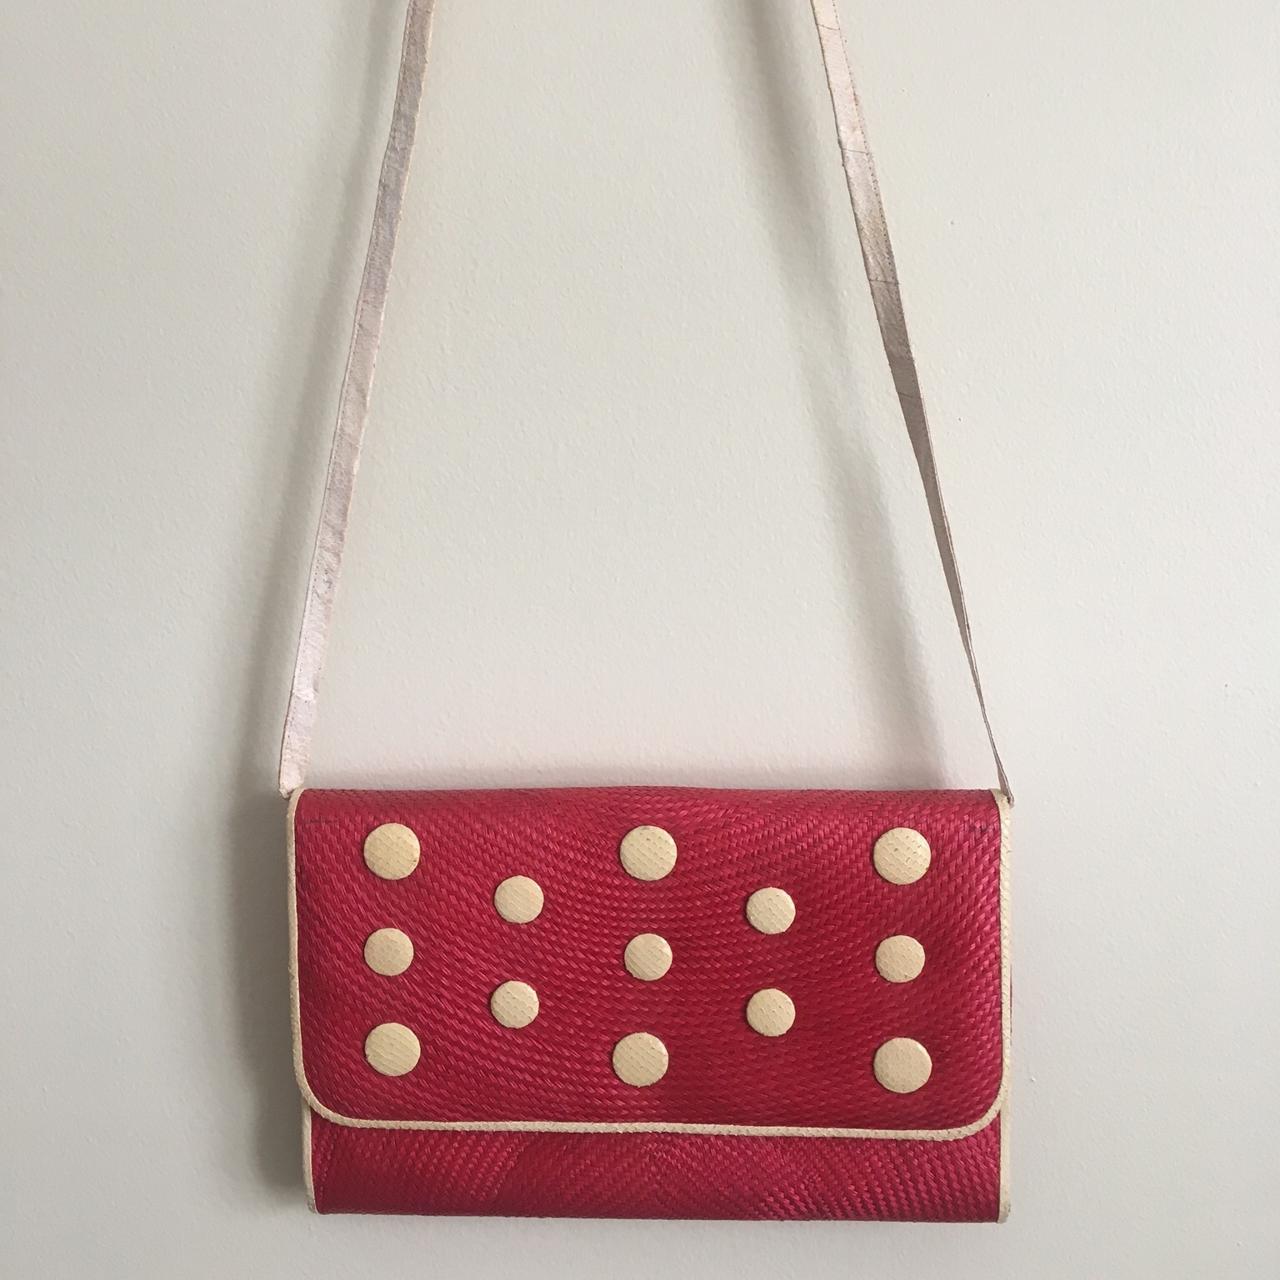 Vintage pink polka dot purse up for grabs! This... - Depop